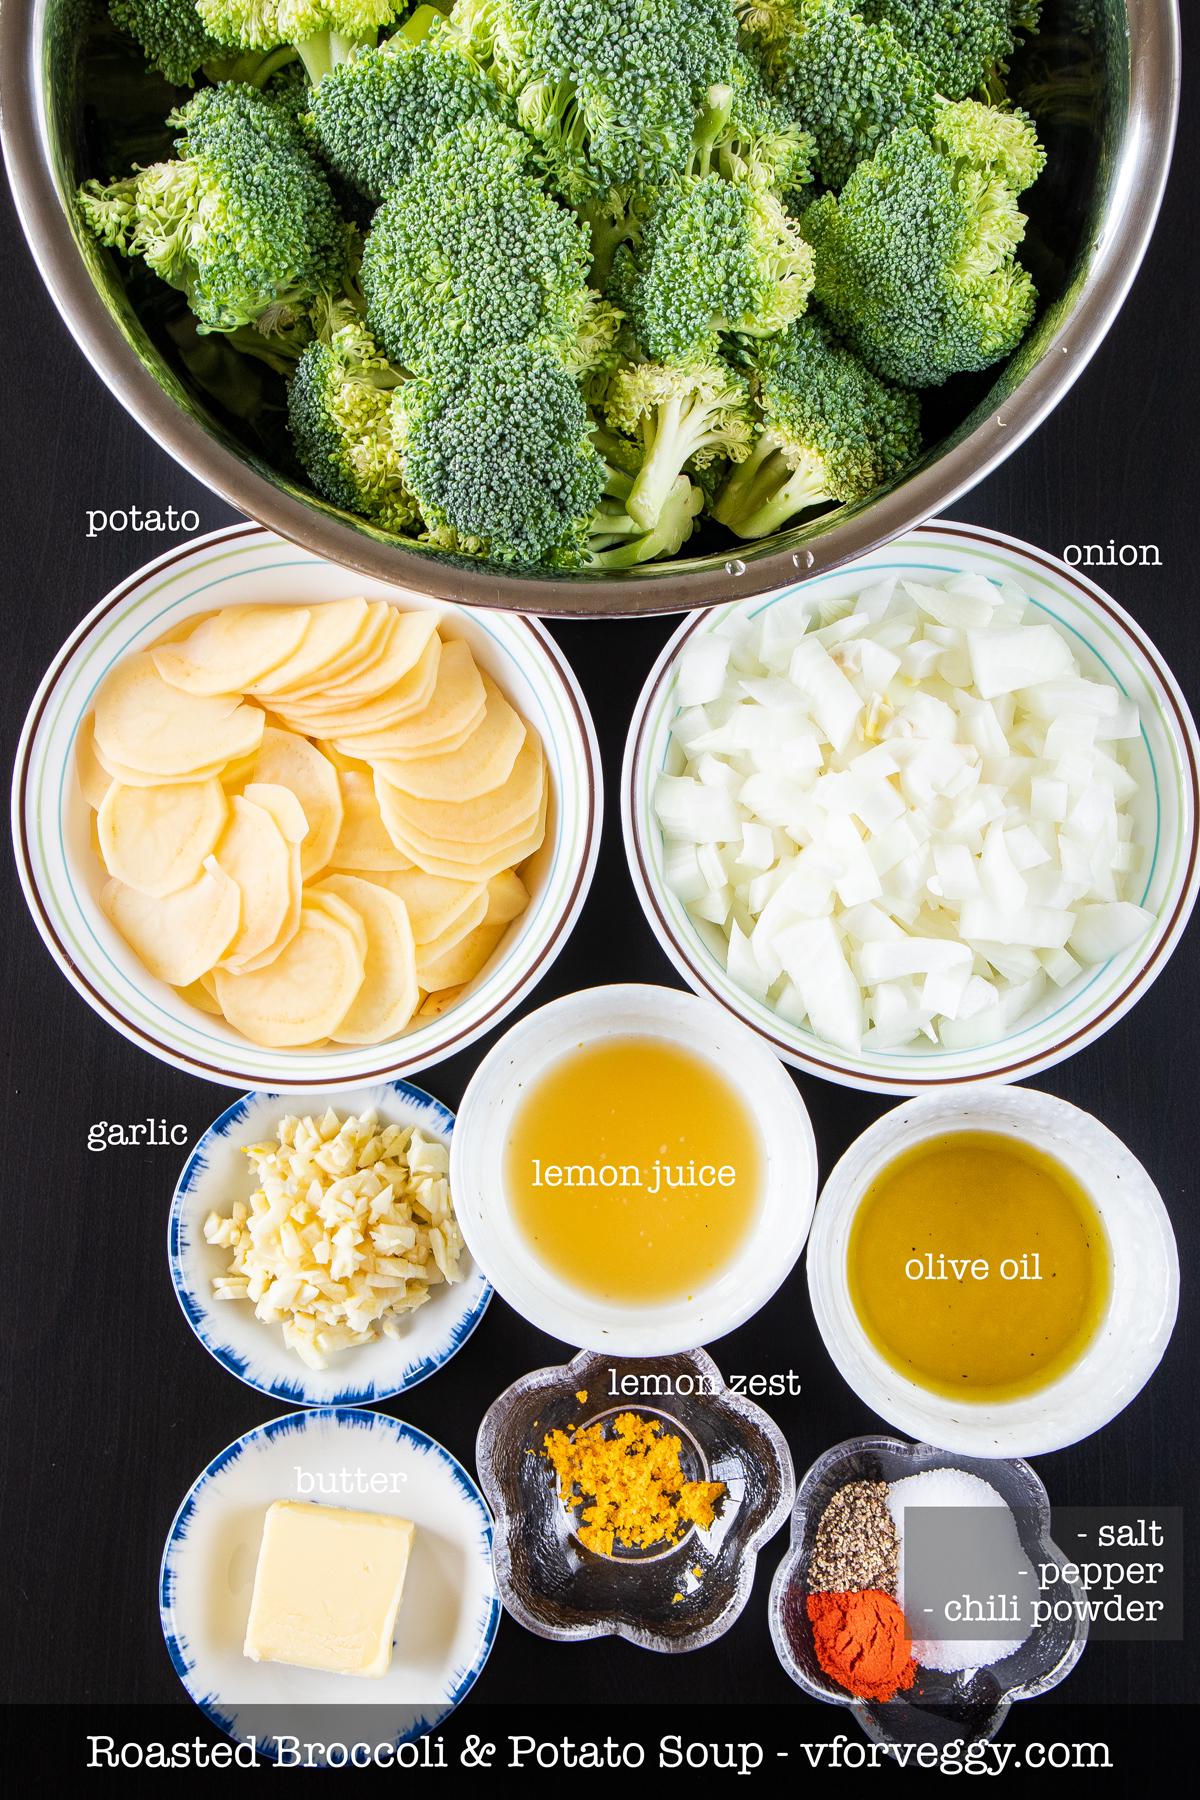 Ingredients for roasted broccoli and potato soup: broccoli, potato, onion, garlic, butter, lemon zest, lemon juice, olive oil, chili powder, salt, and pepper.